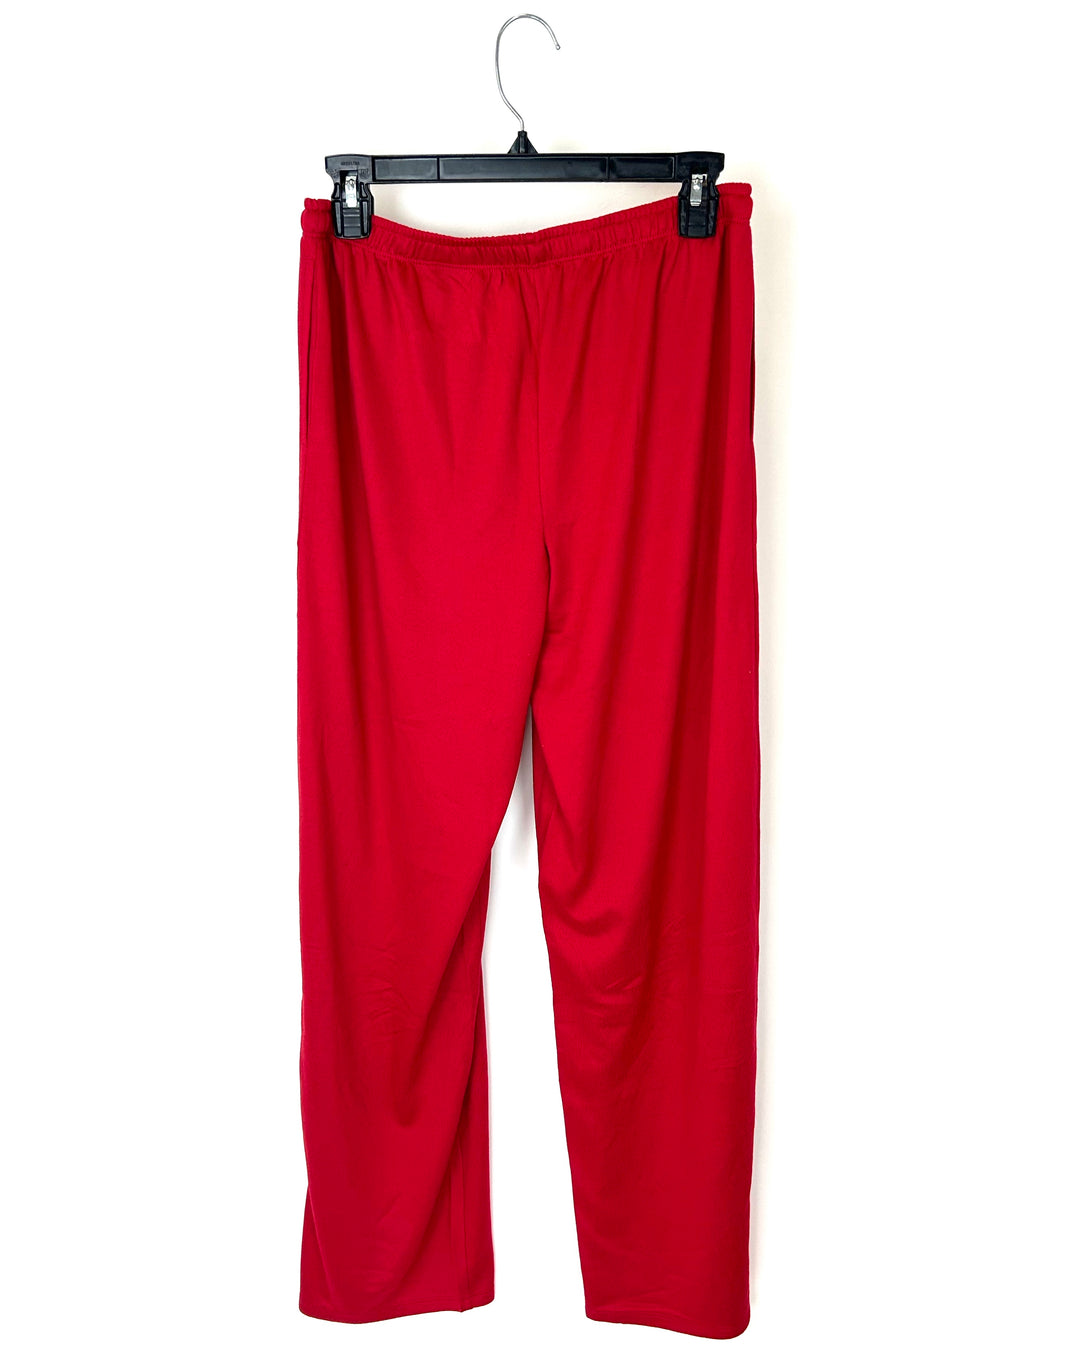 Red Soft Pajama Set - Size 6/8